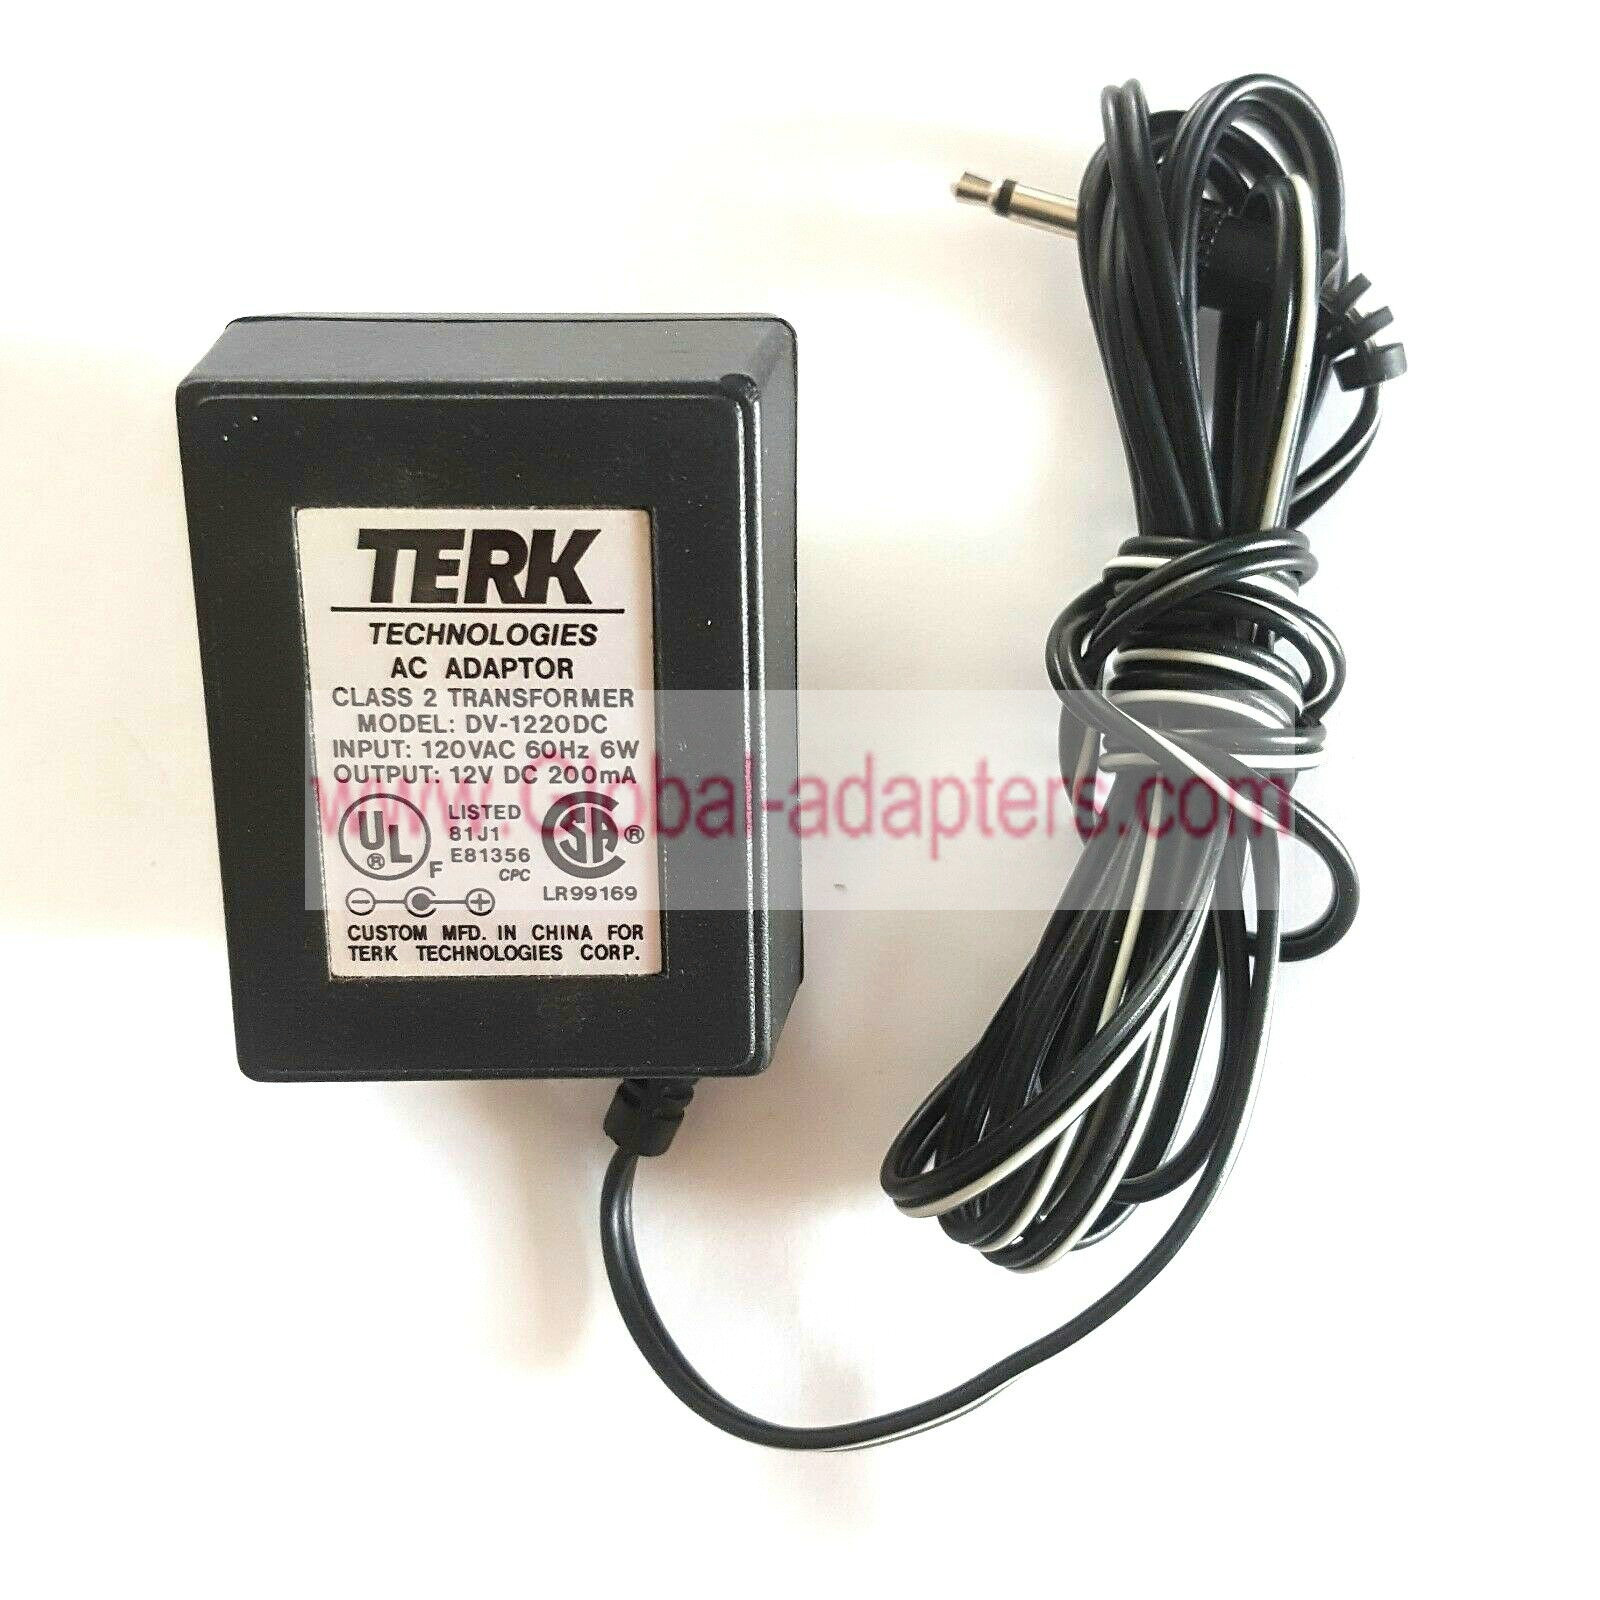 NEW Terk Technologies 12V 200mA AC Adaptor DV-1220DC Power Supply